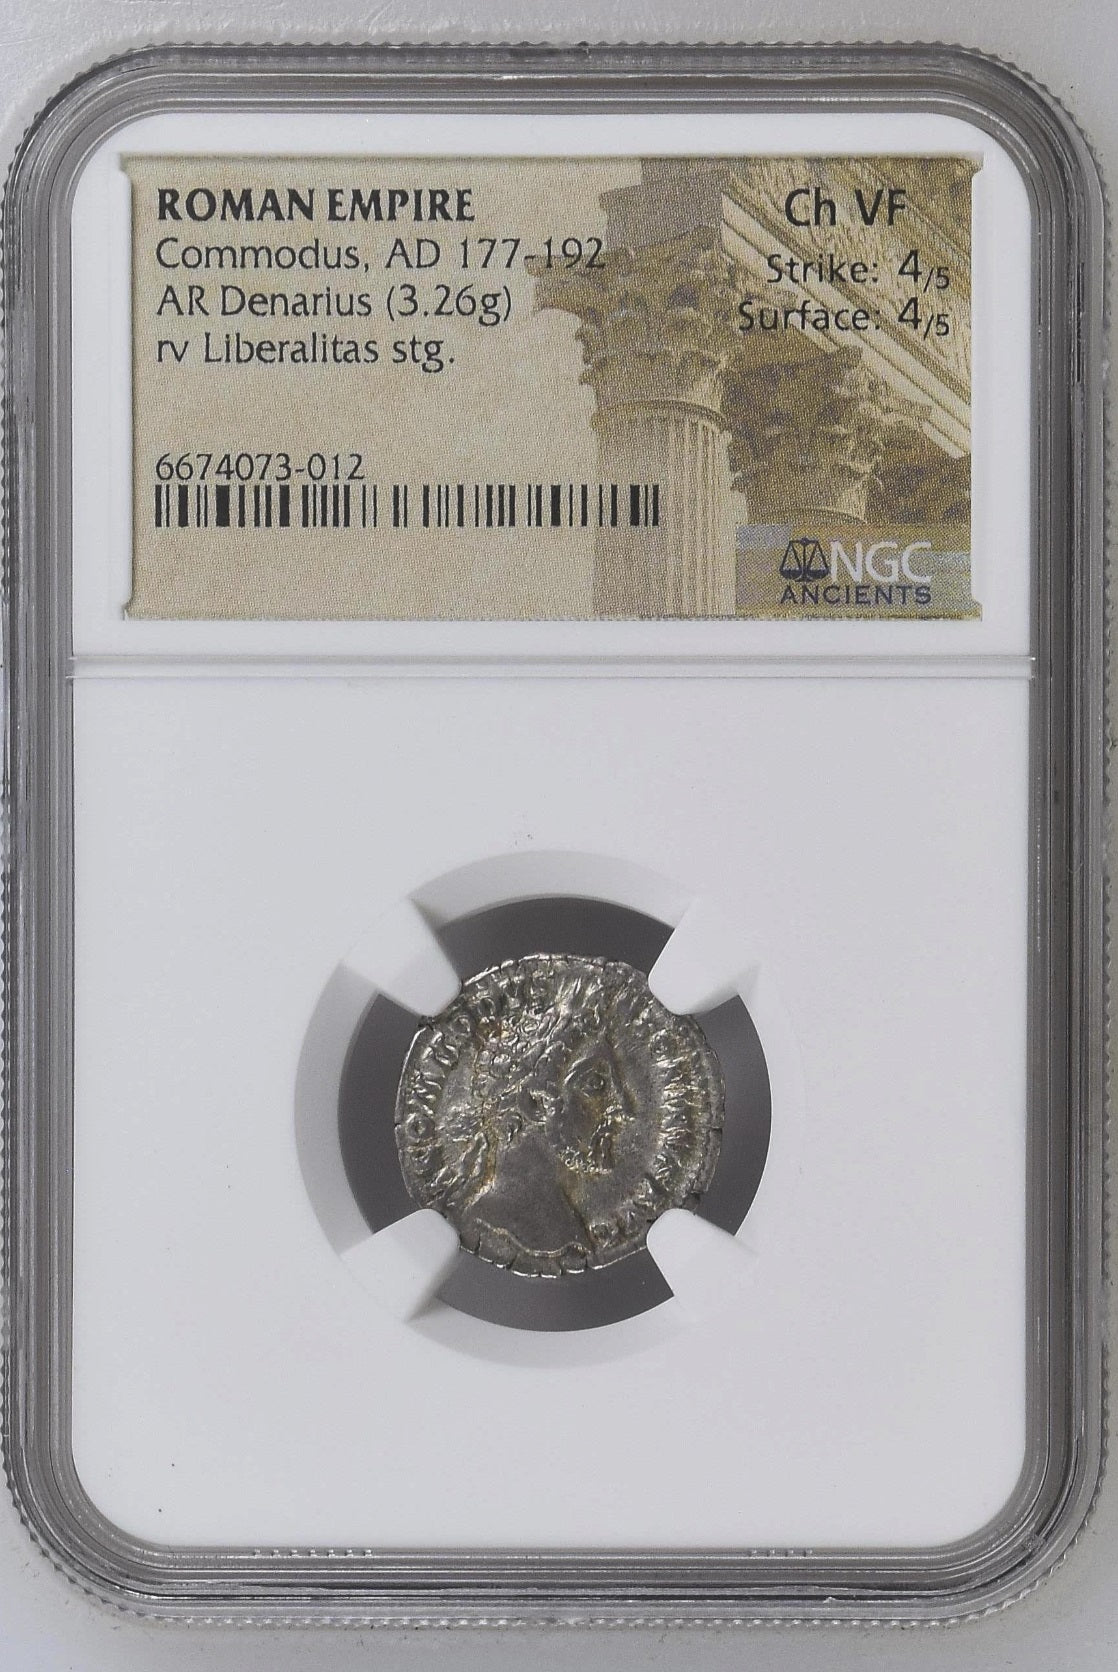 Roman Empire - Commodus - Silver Denarius - NGC Ch VF - RIC:36